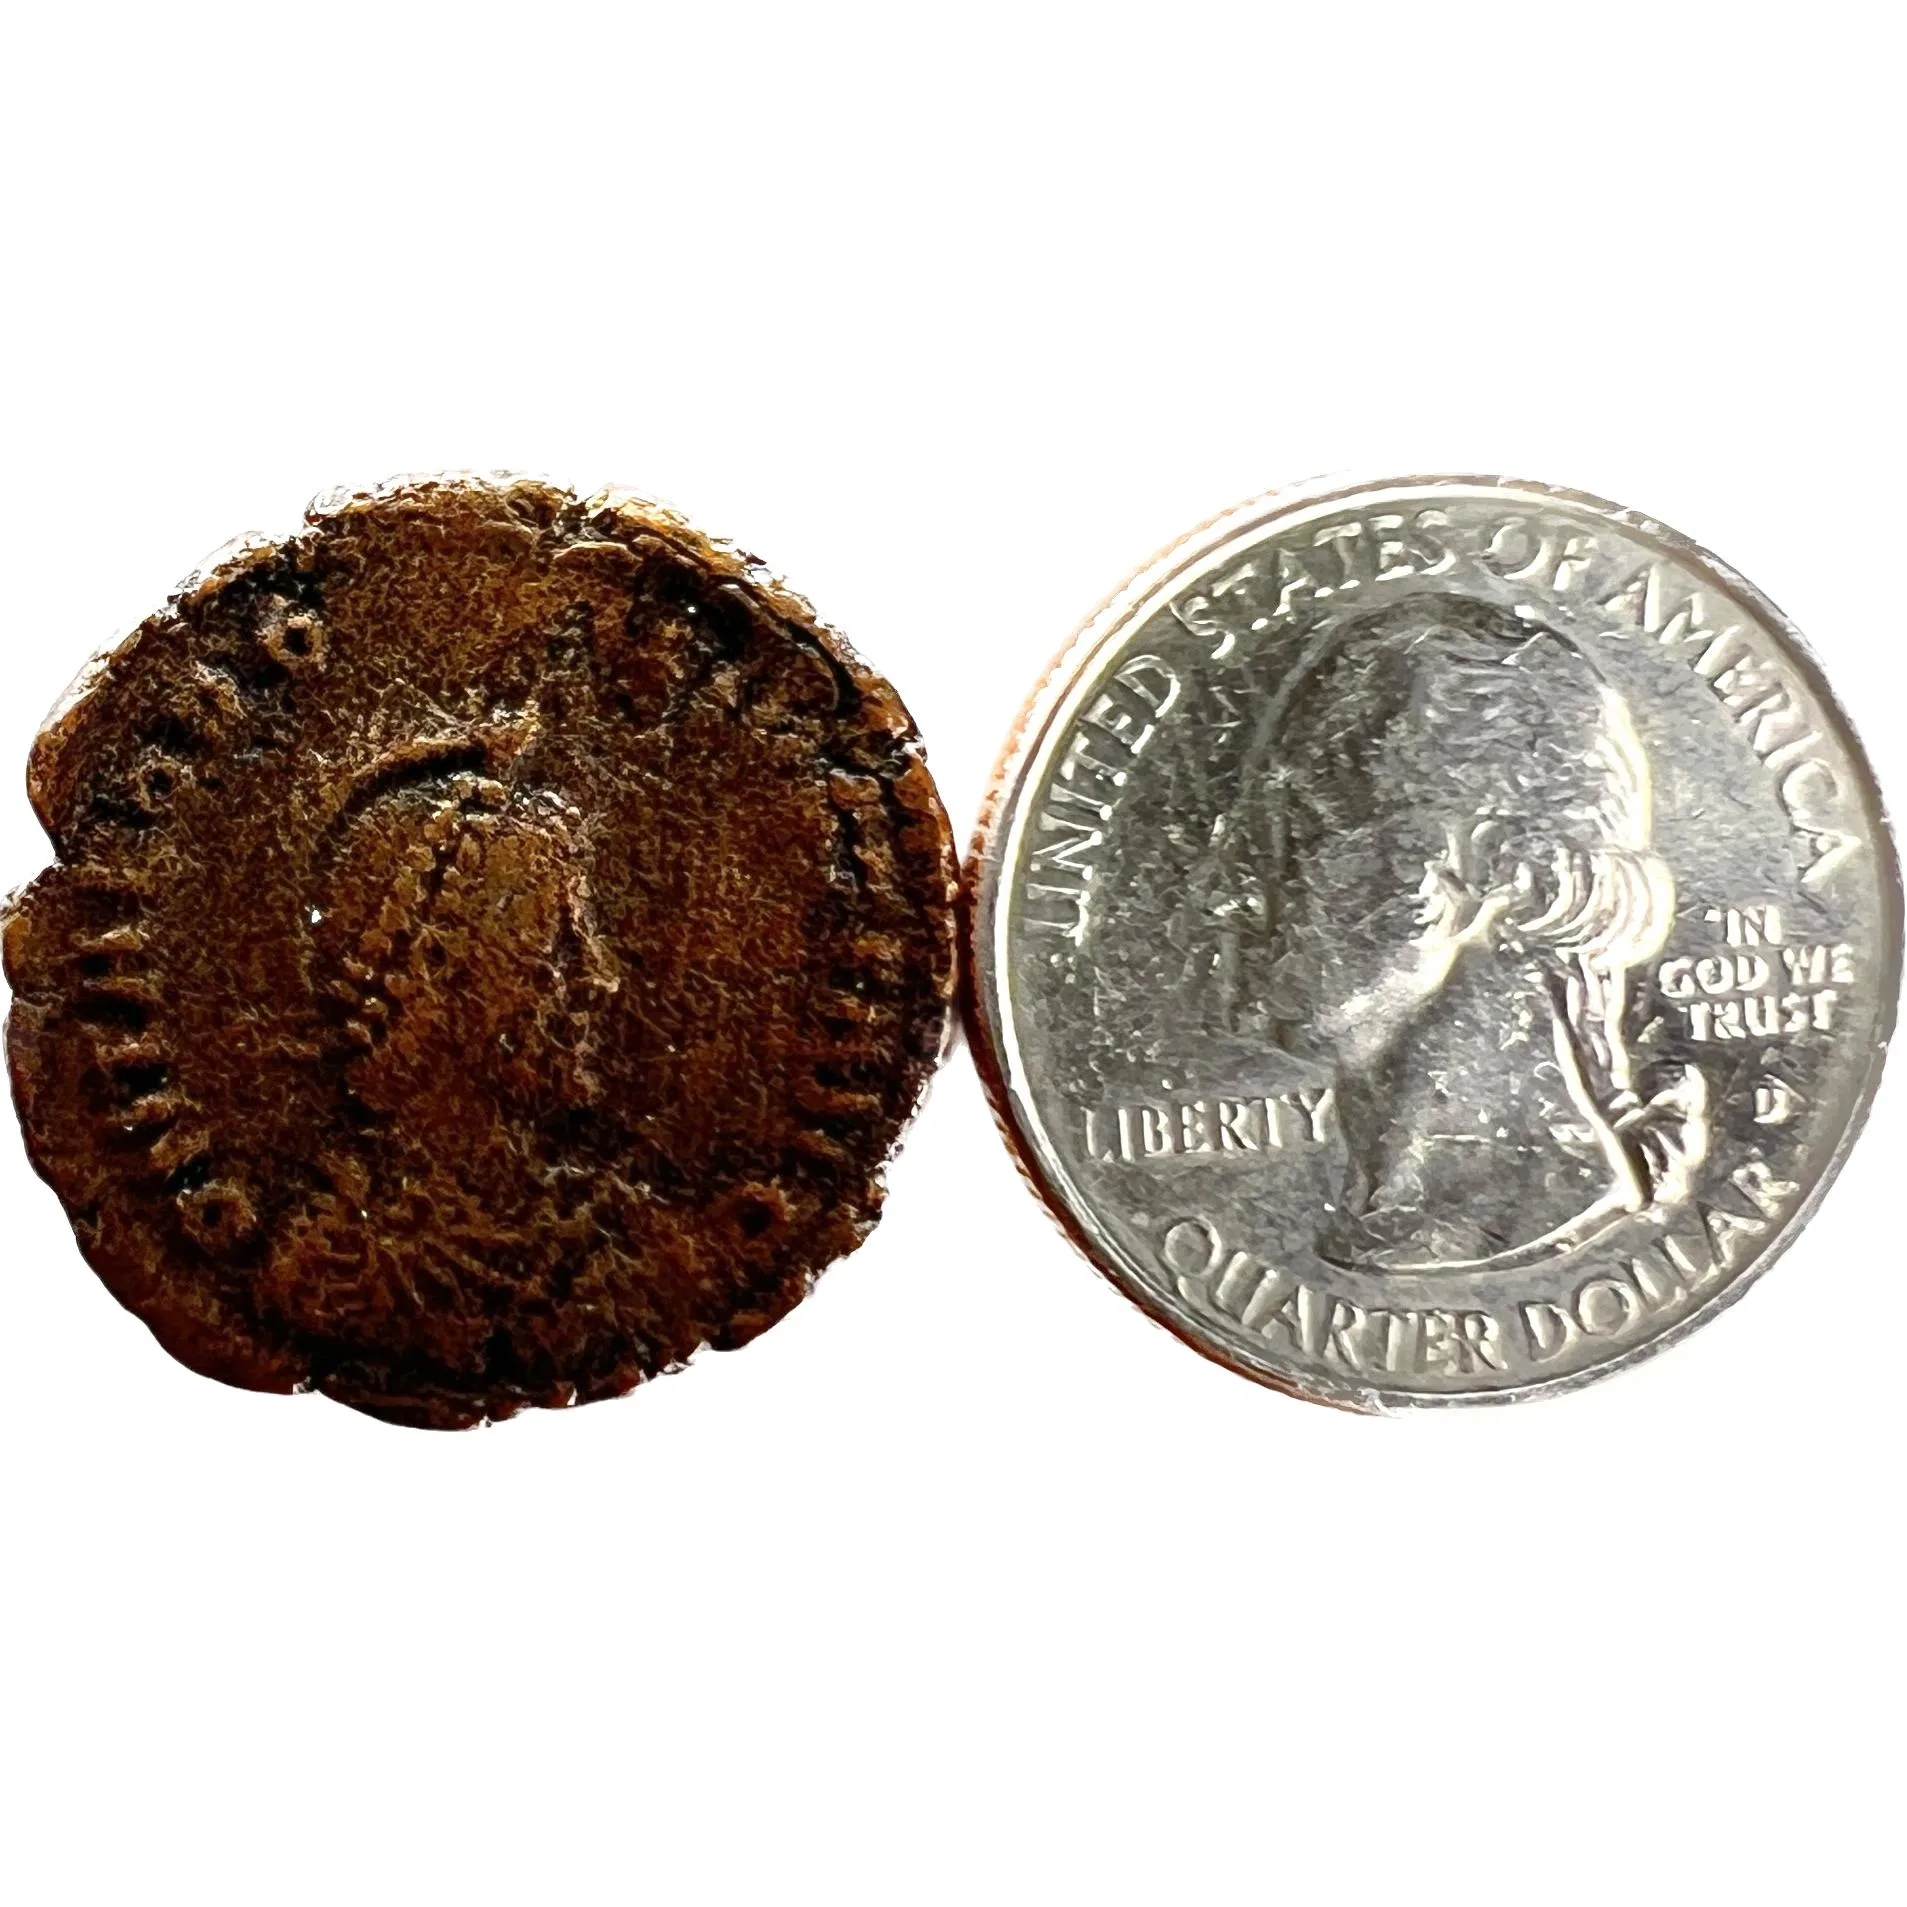 Roman Coin, Bronze treasure Constantine era Prehistoric Online